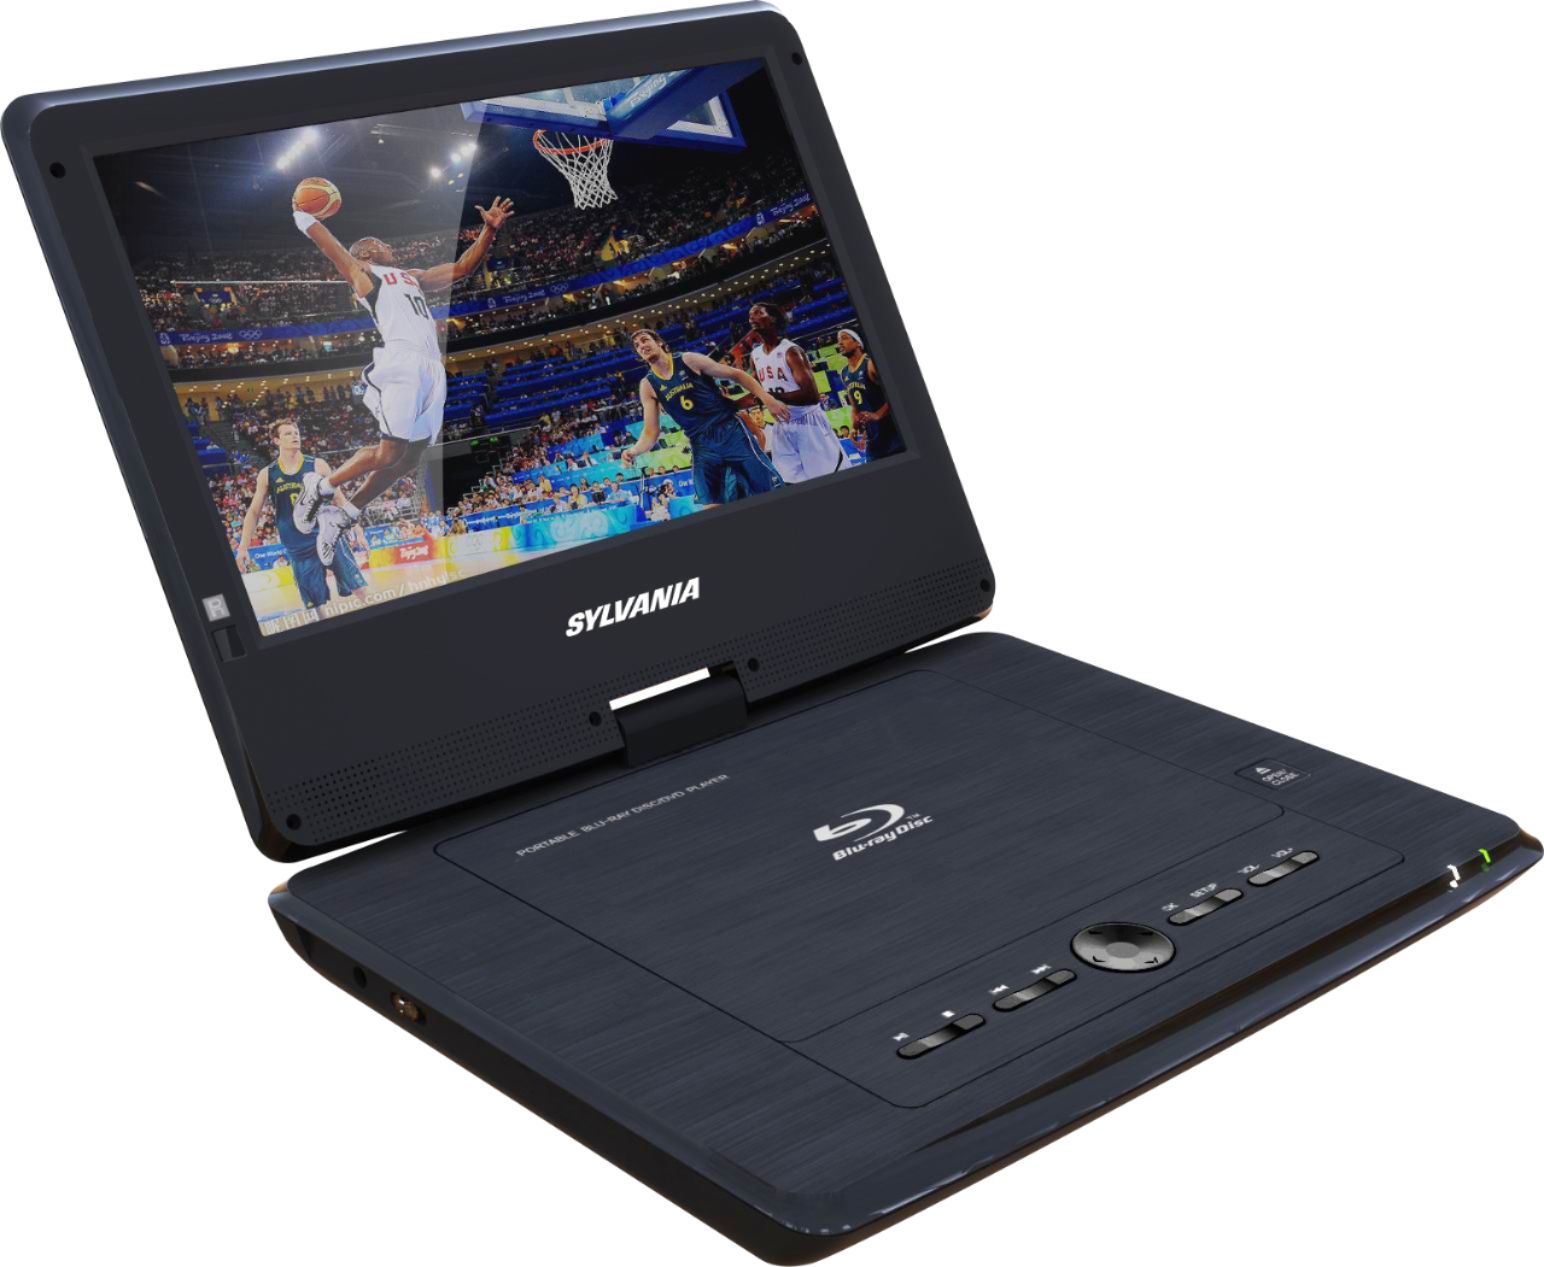 Angle View: Sylvania - 10” Portable Blu-ray Player with Swivel Screen - Black